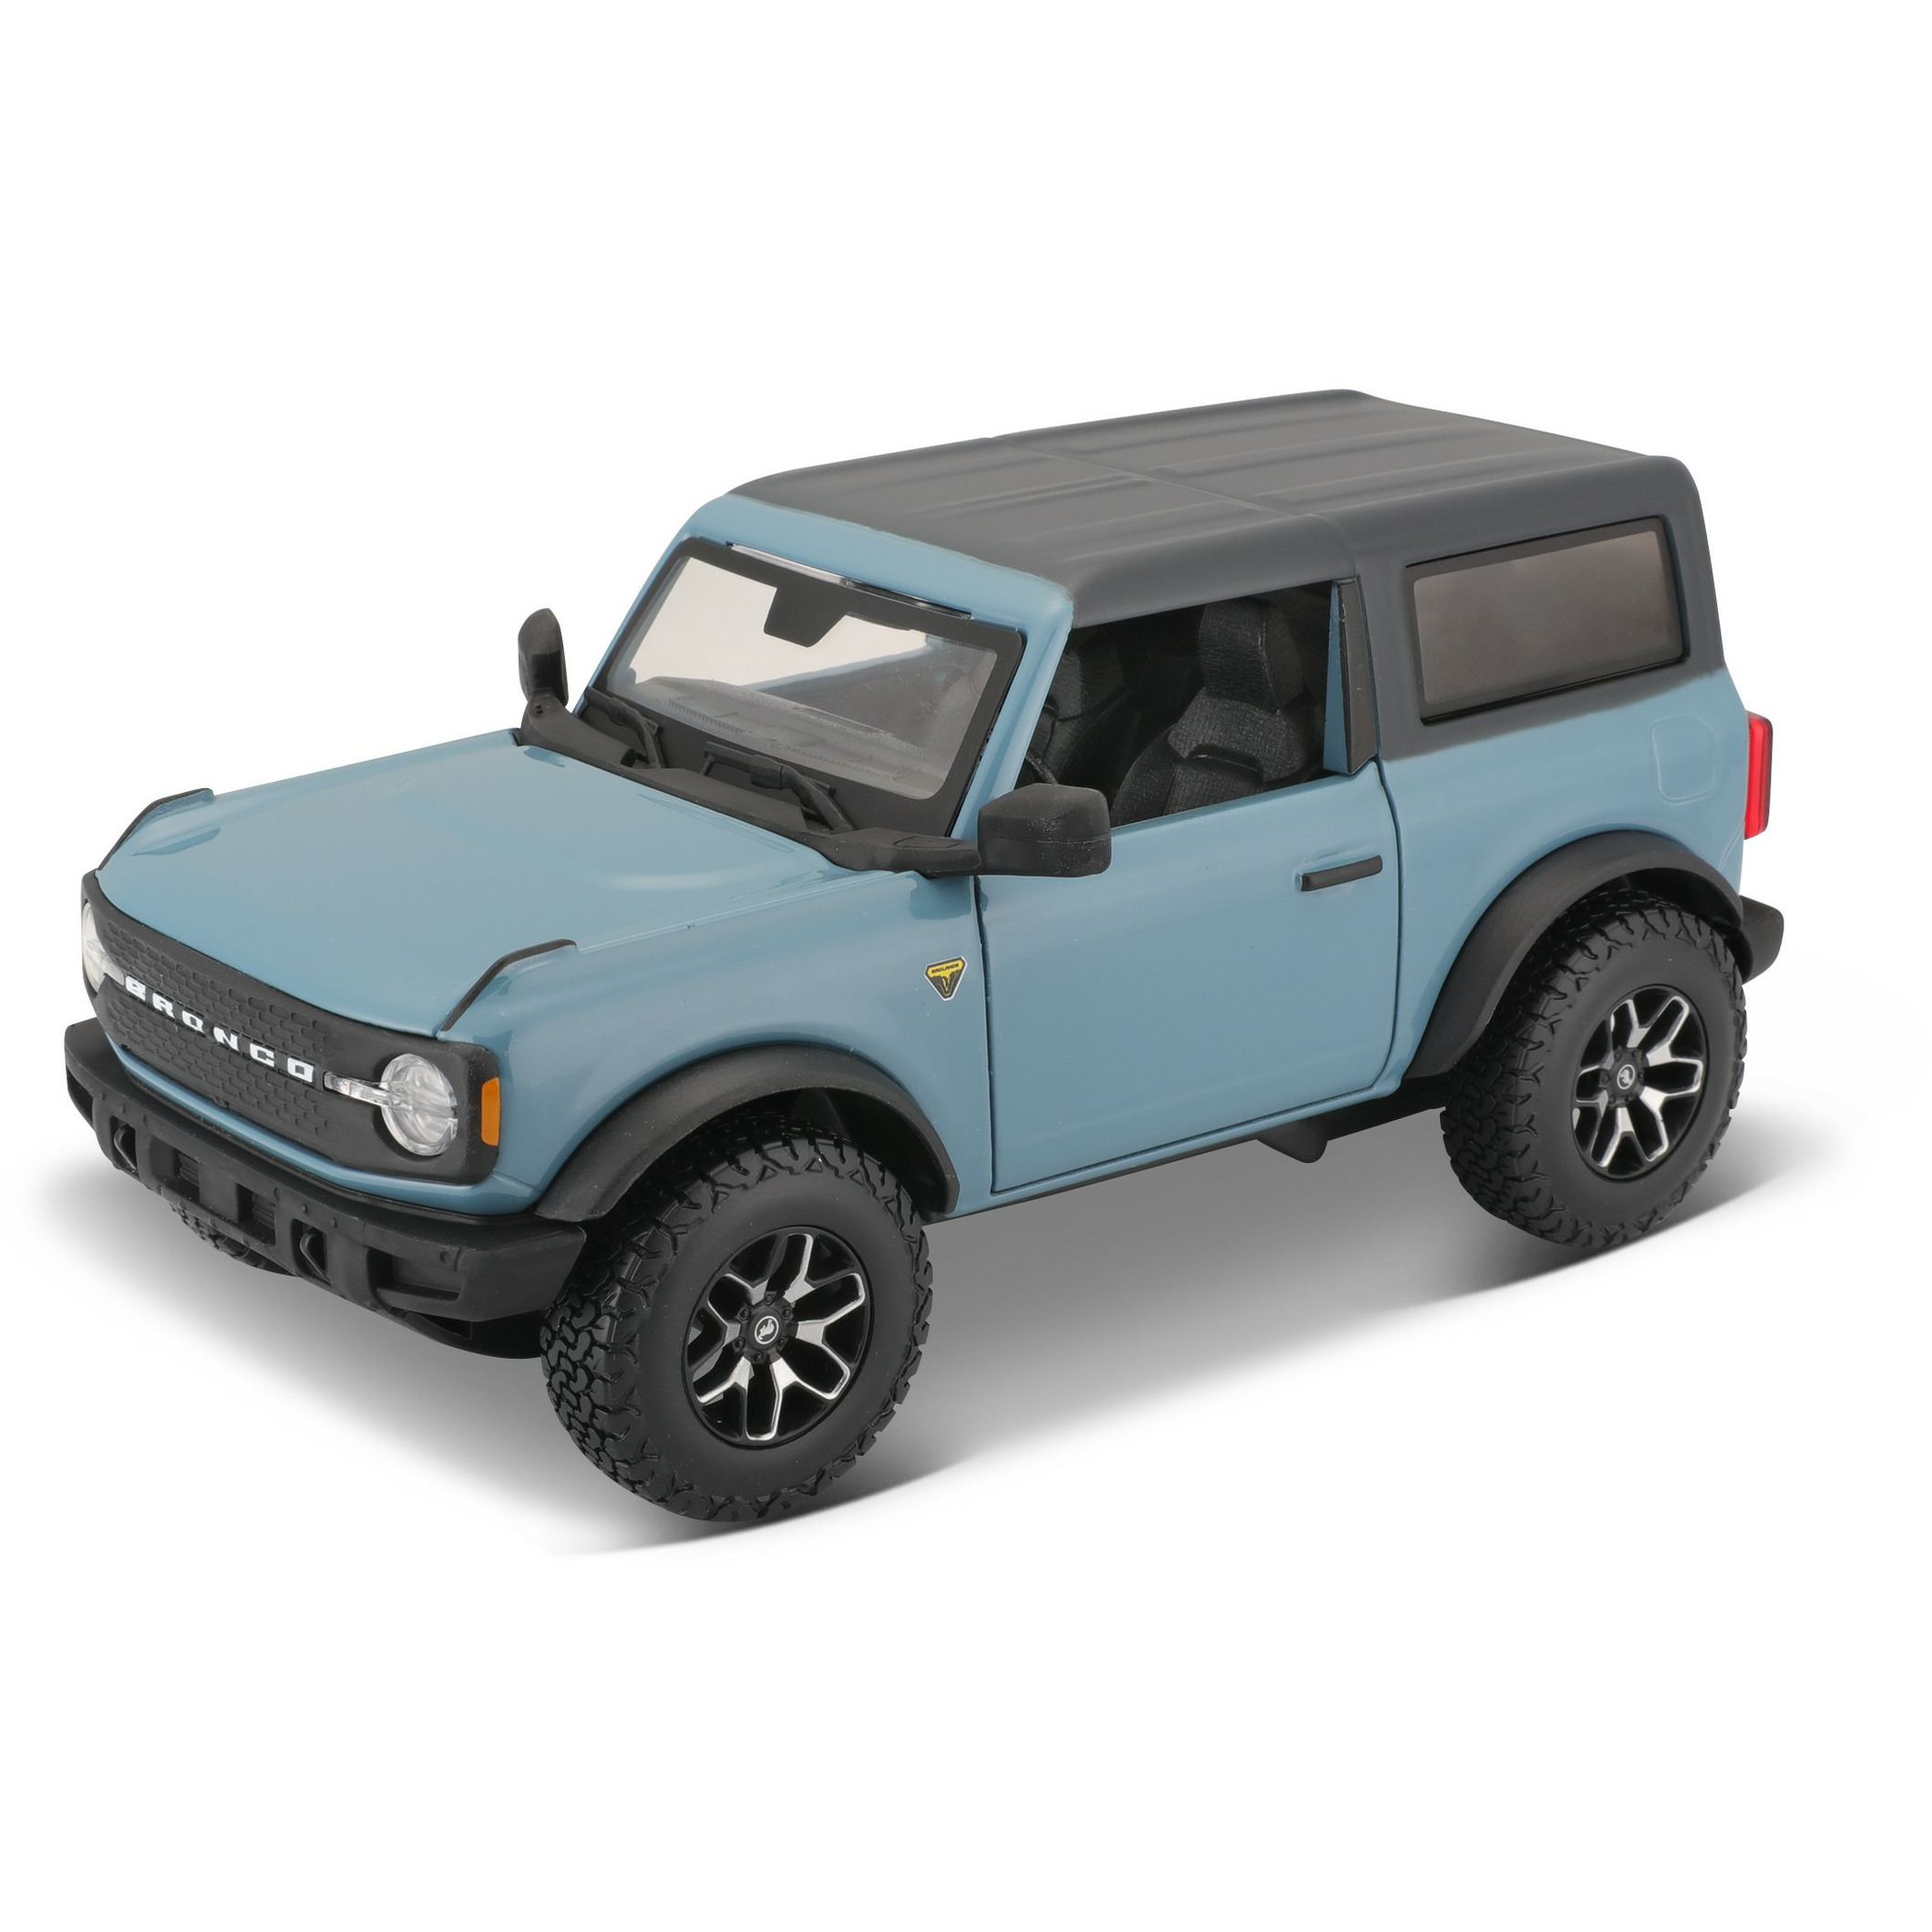 Modelauto-speelgoedauto Ford Bronco Badlands blauw schaal 1:24-18 x 8 x 7 cm